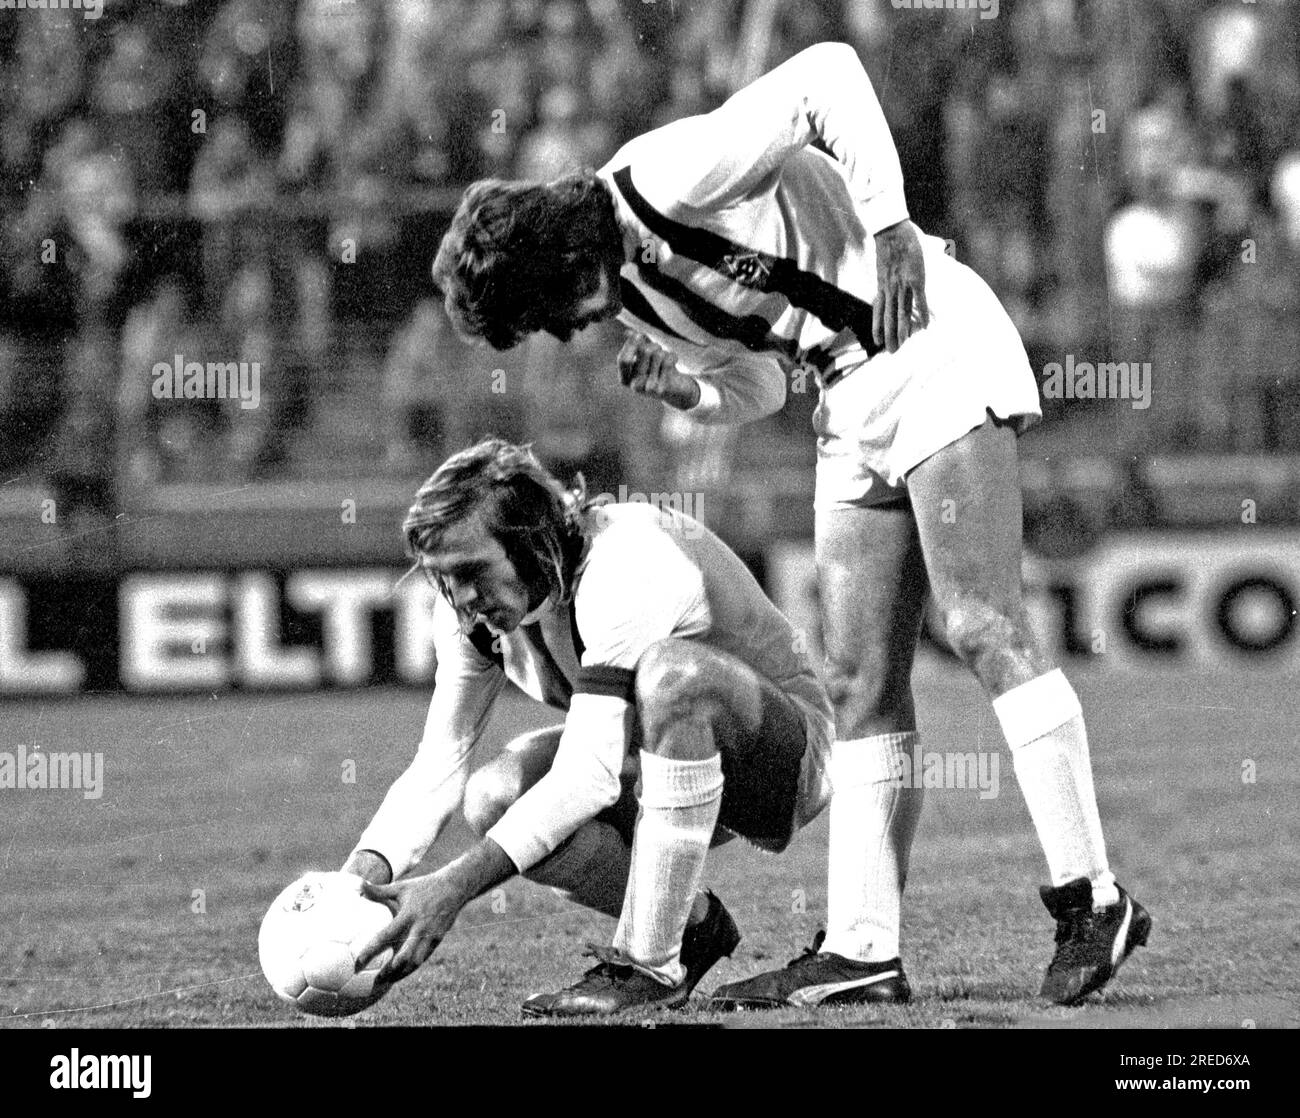 DFB Cup final 1973: Borussia Mönchengladbach - 1. FC Köln 2:1 / Guenter Netzer sets up the ball for a free kick, Jupp Heynckes gives tips [automated translation] Stock Photo